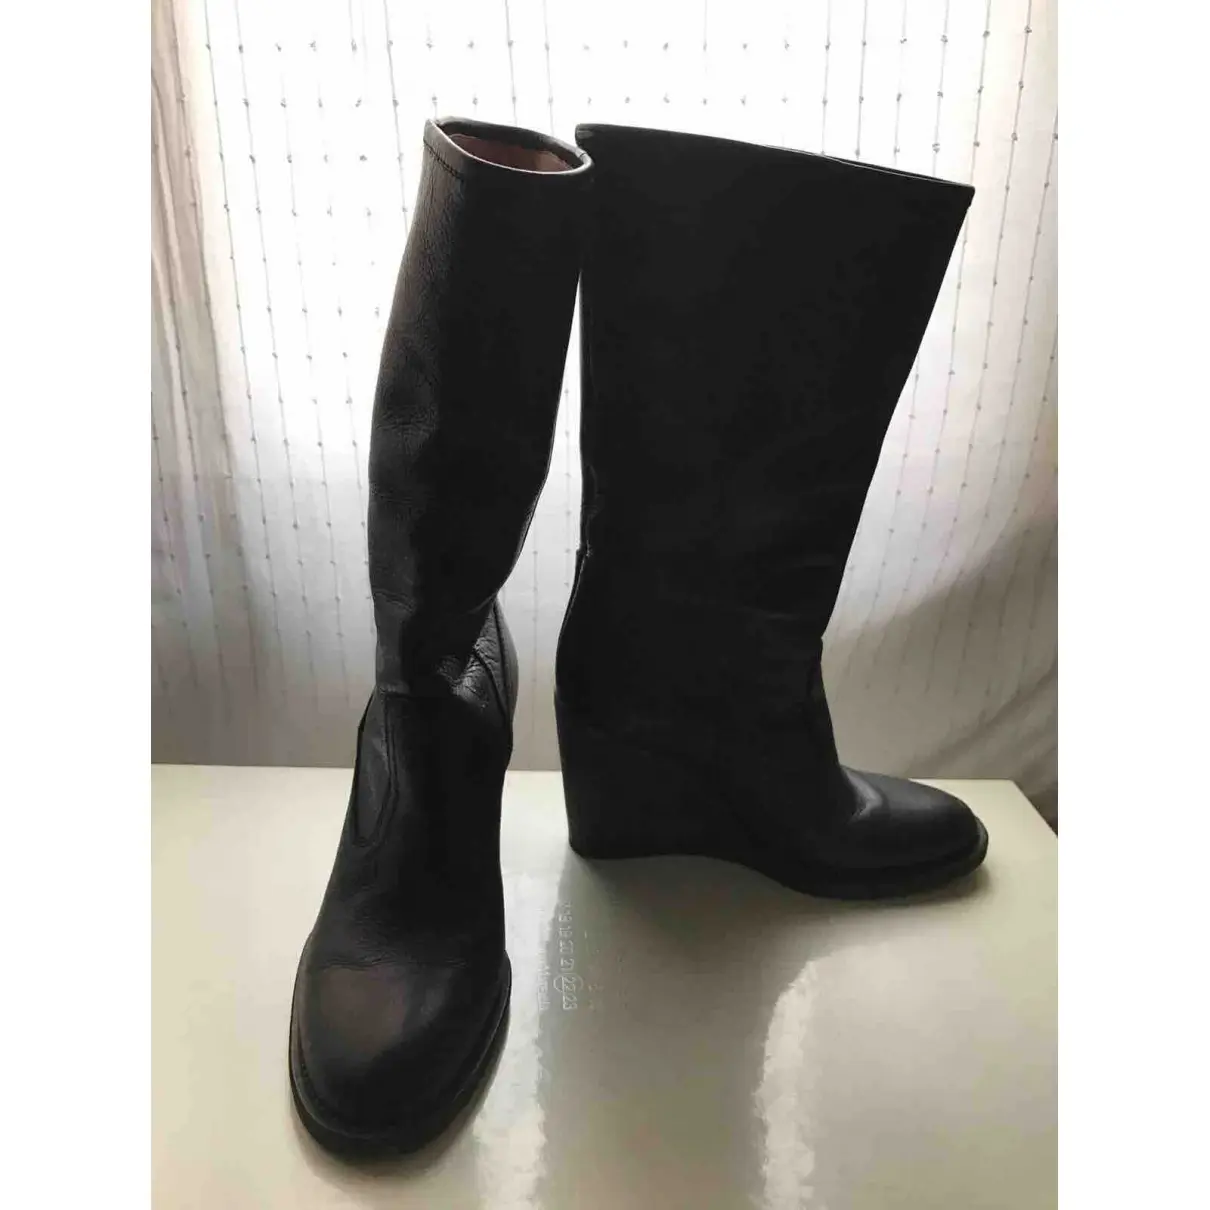 Buy Maison Martin Margiela Leather boots online